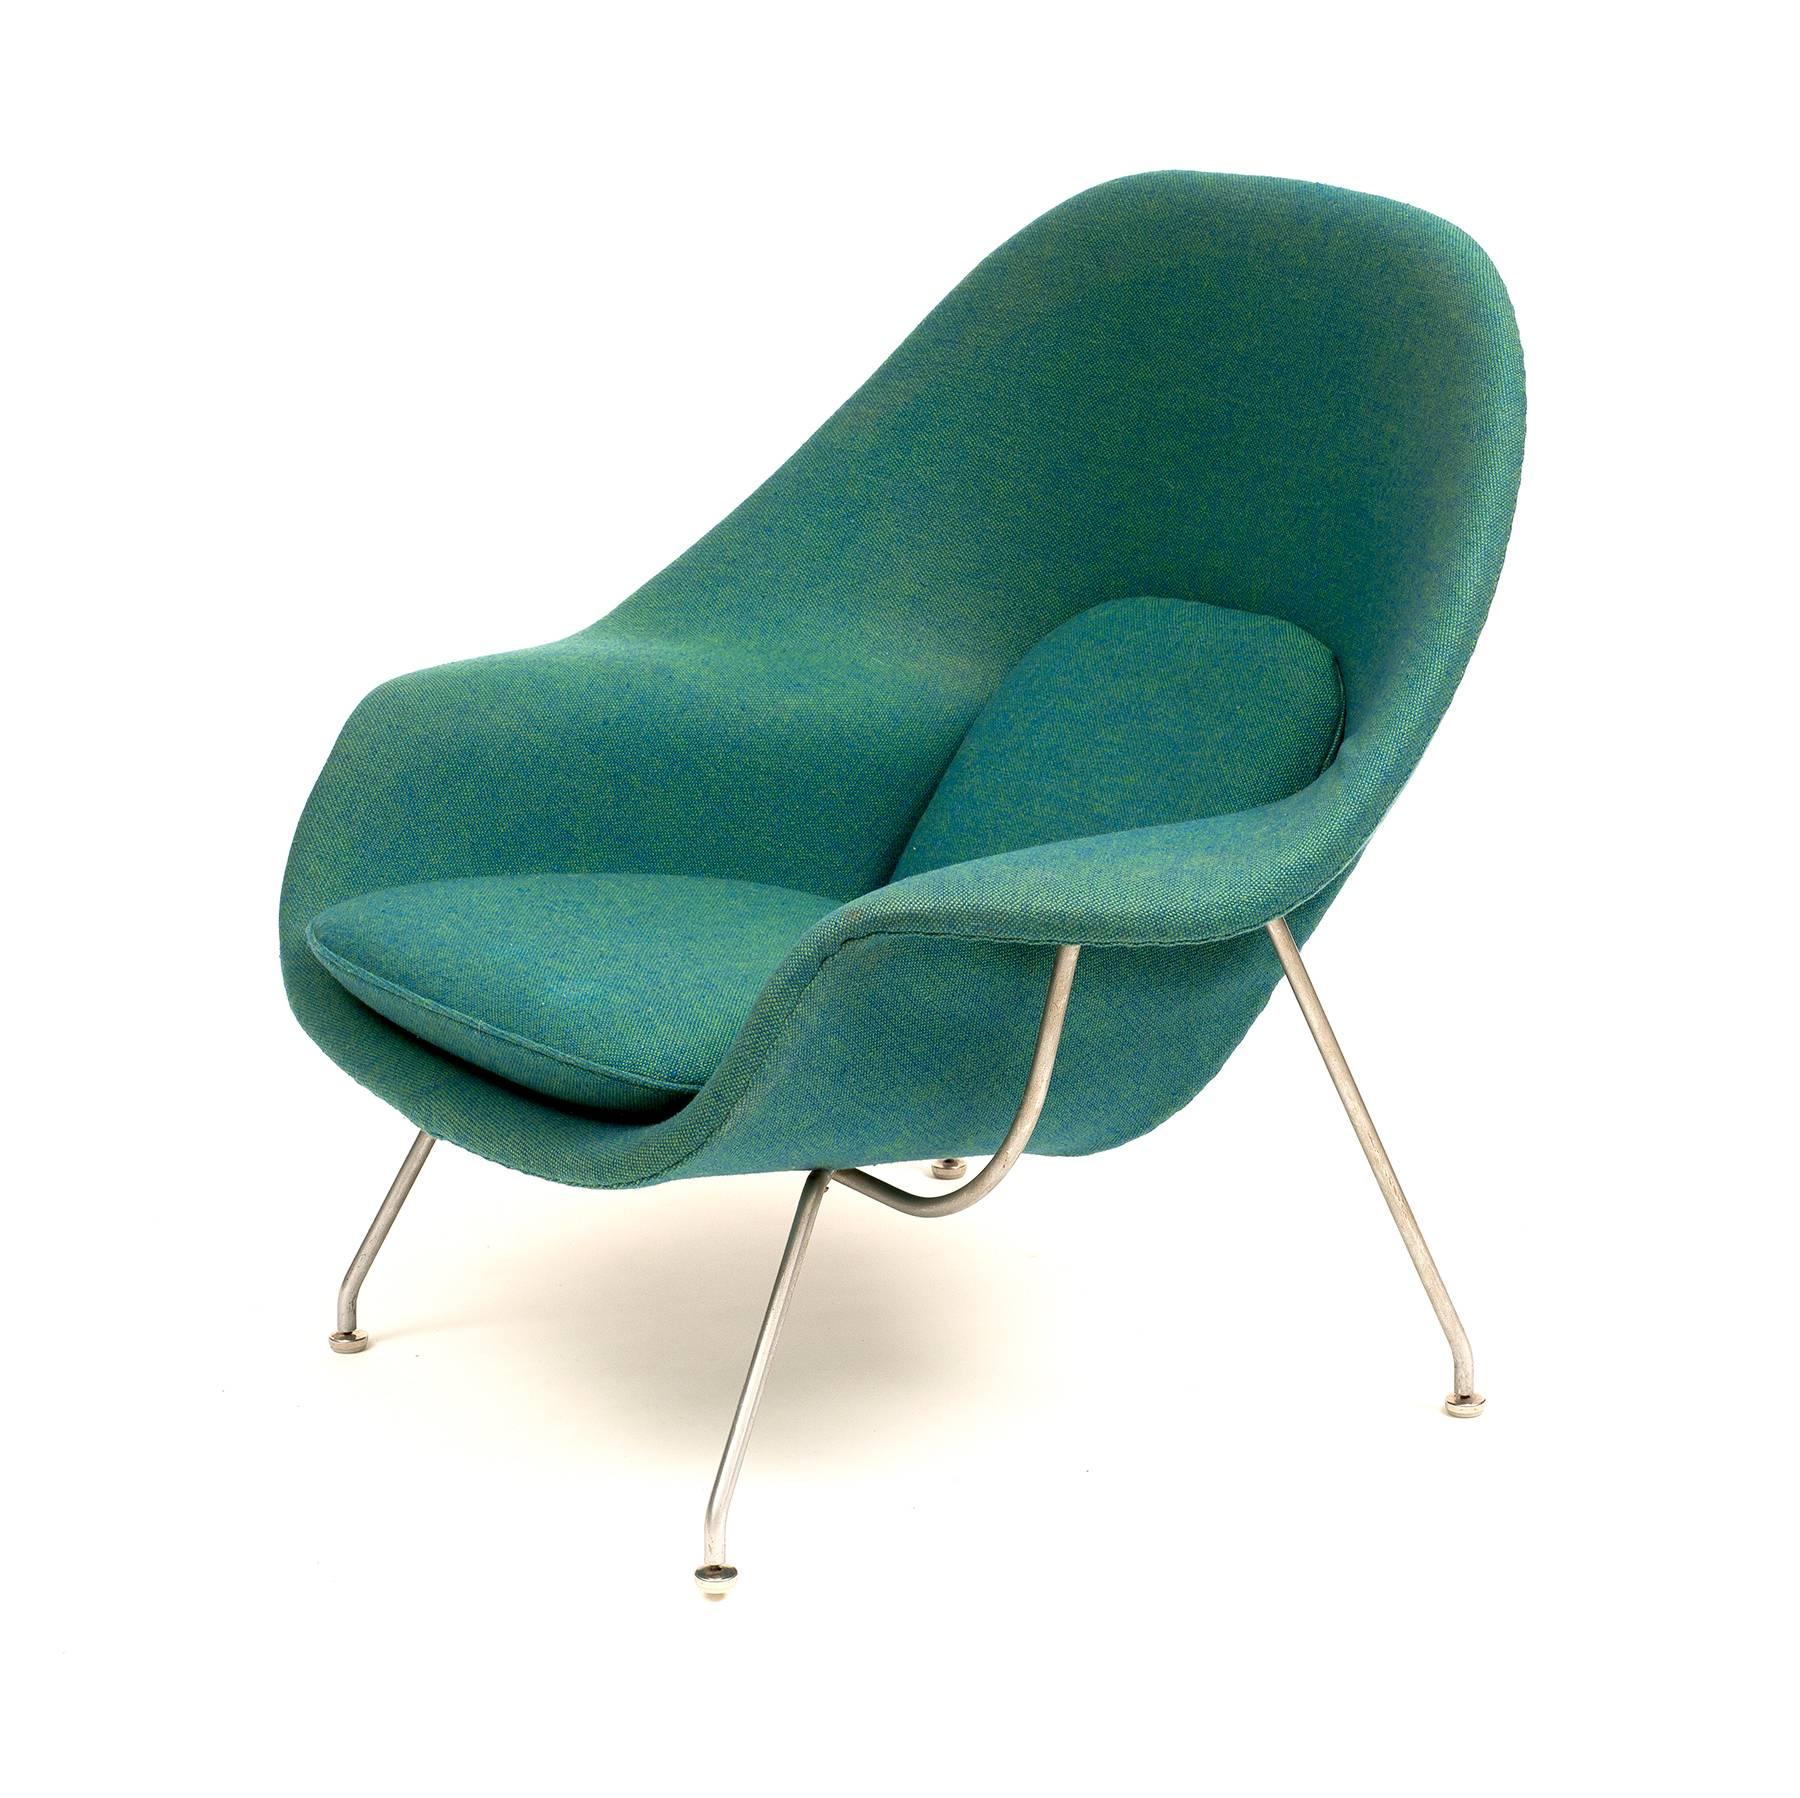 An original womb chair by Eero Saarinen for Knoll in original Knoll blue or green wool, 1970s.